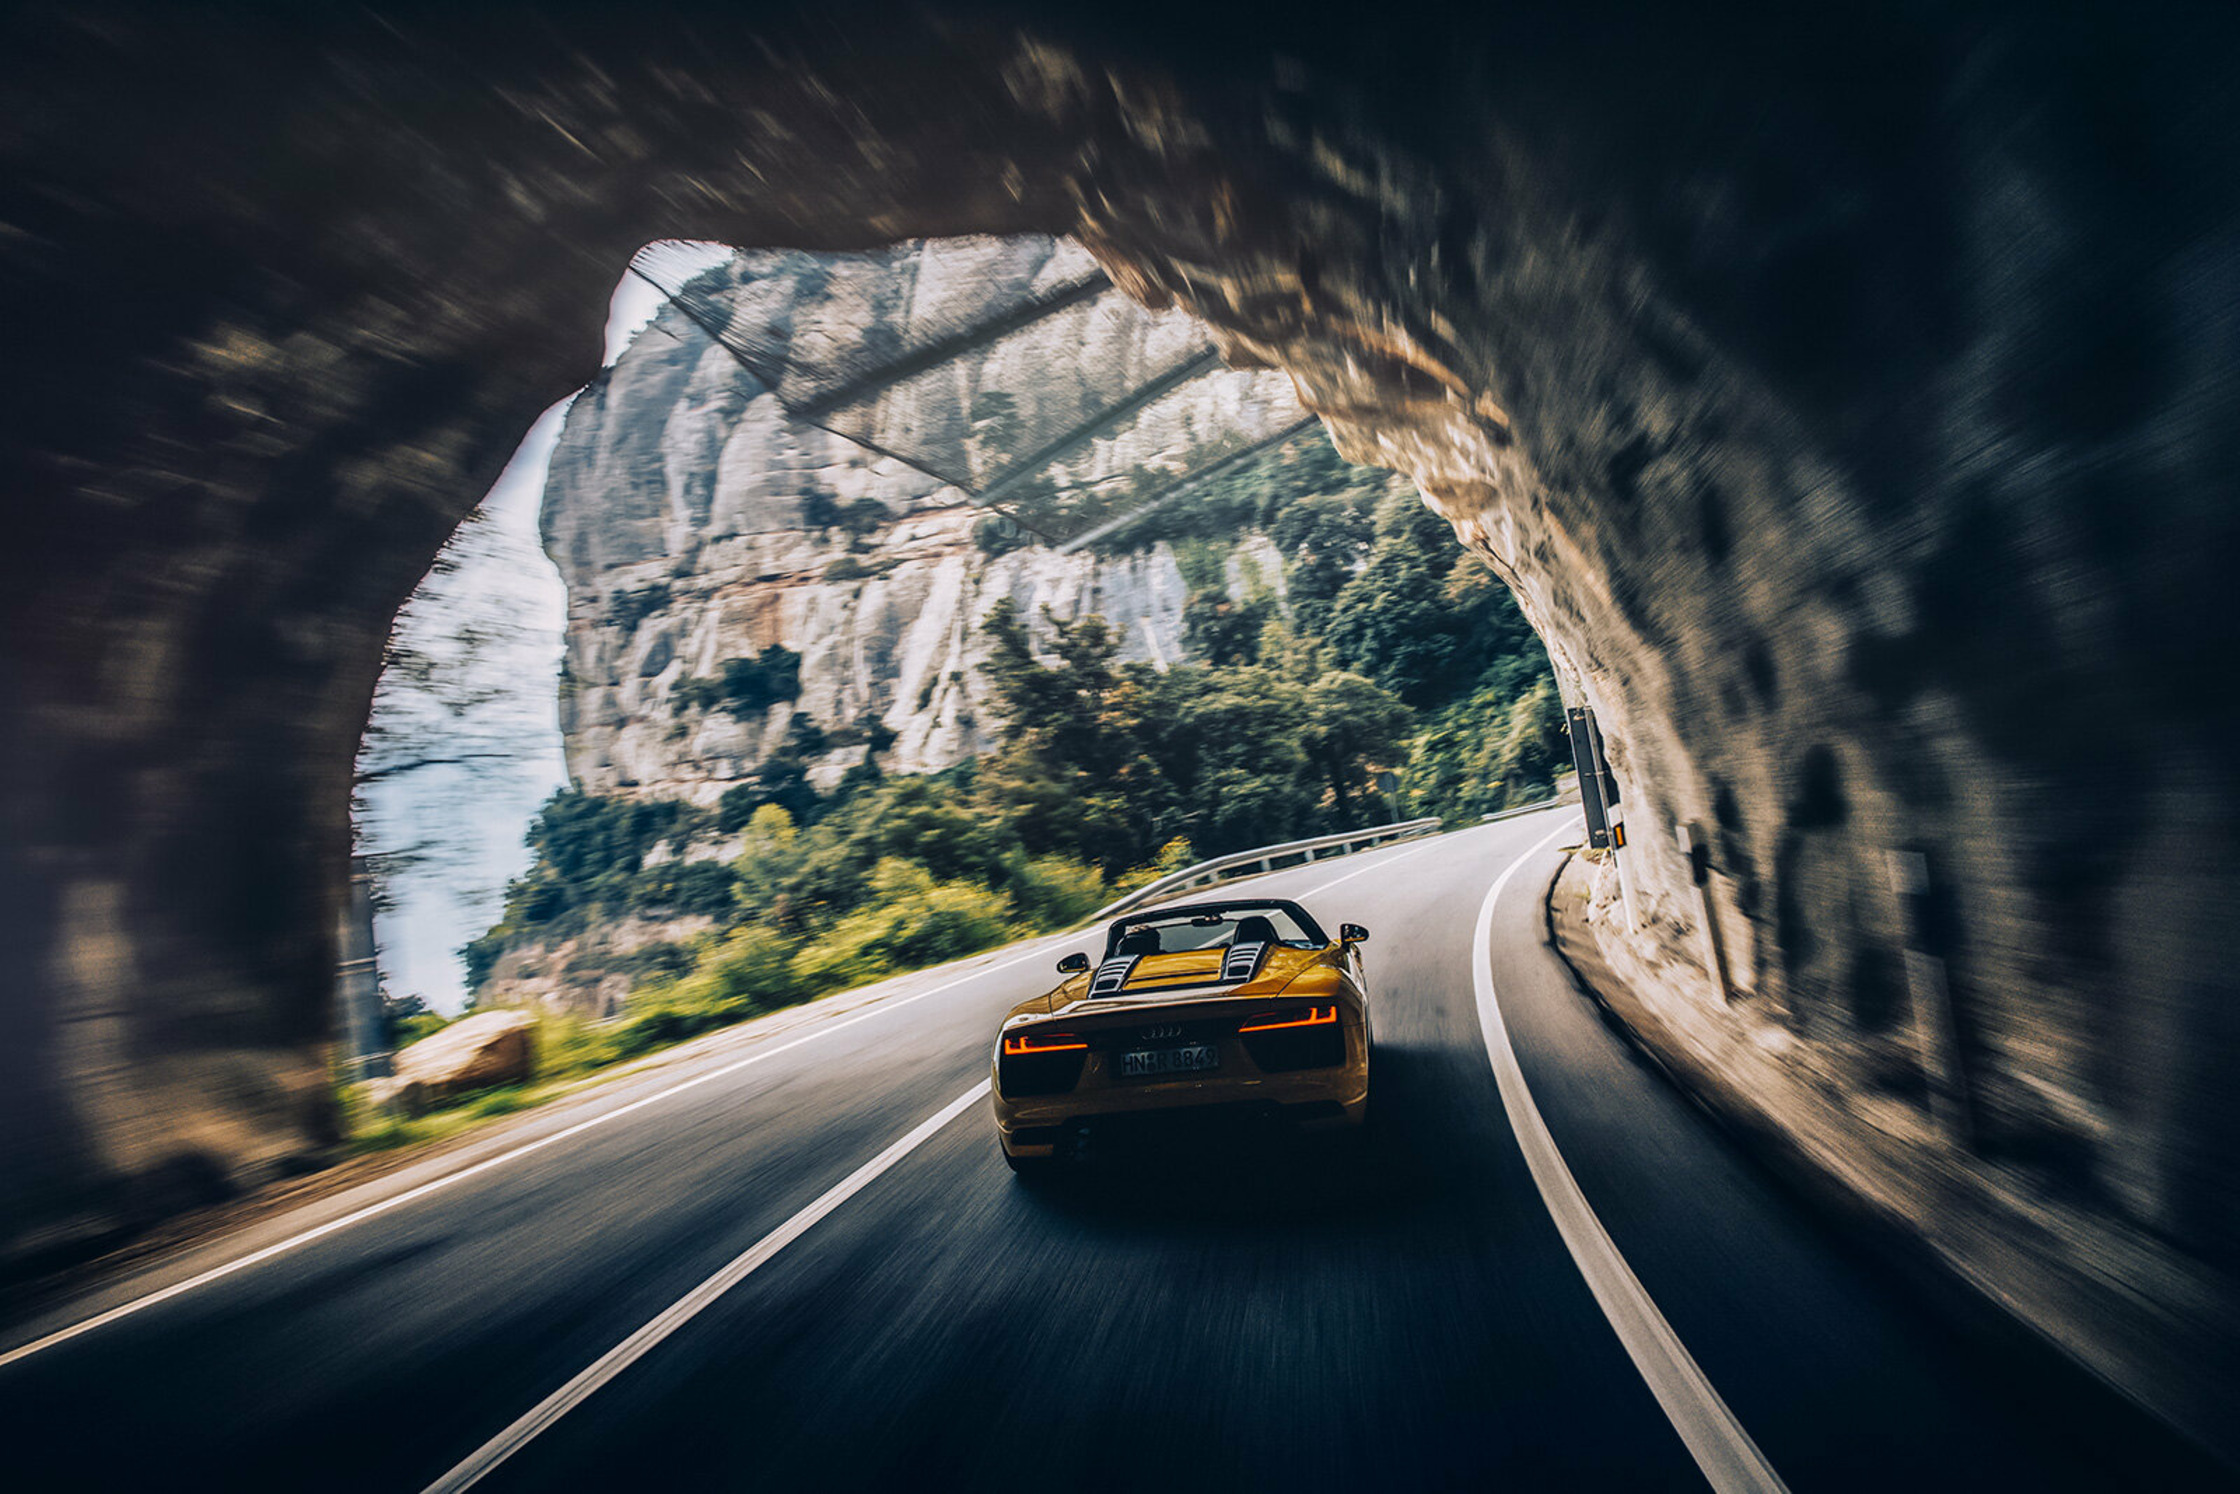 a yellow sports car driving through a tunnel